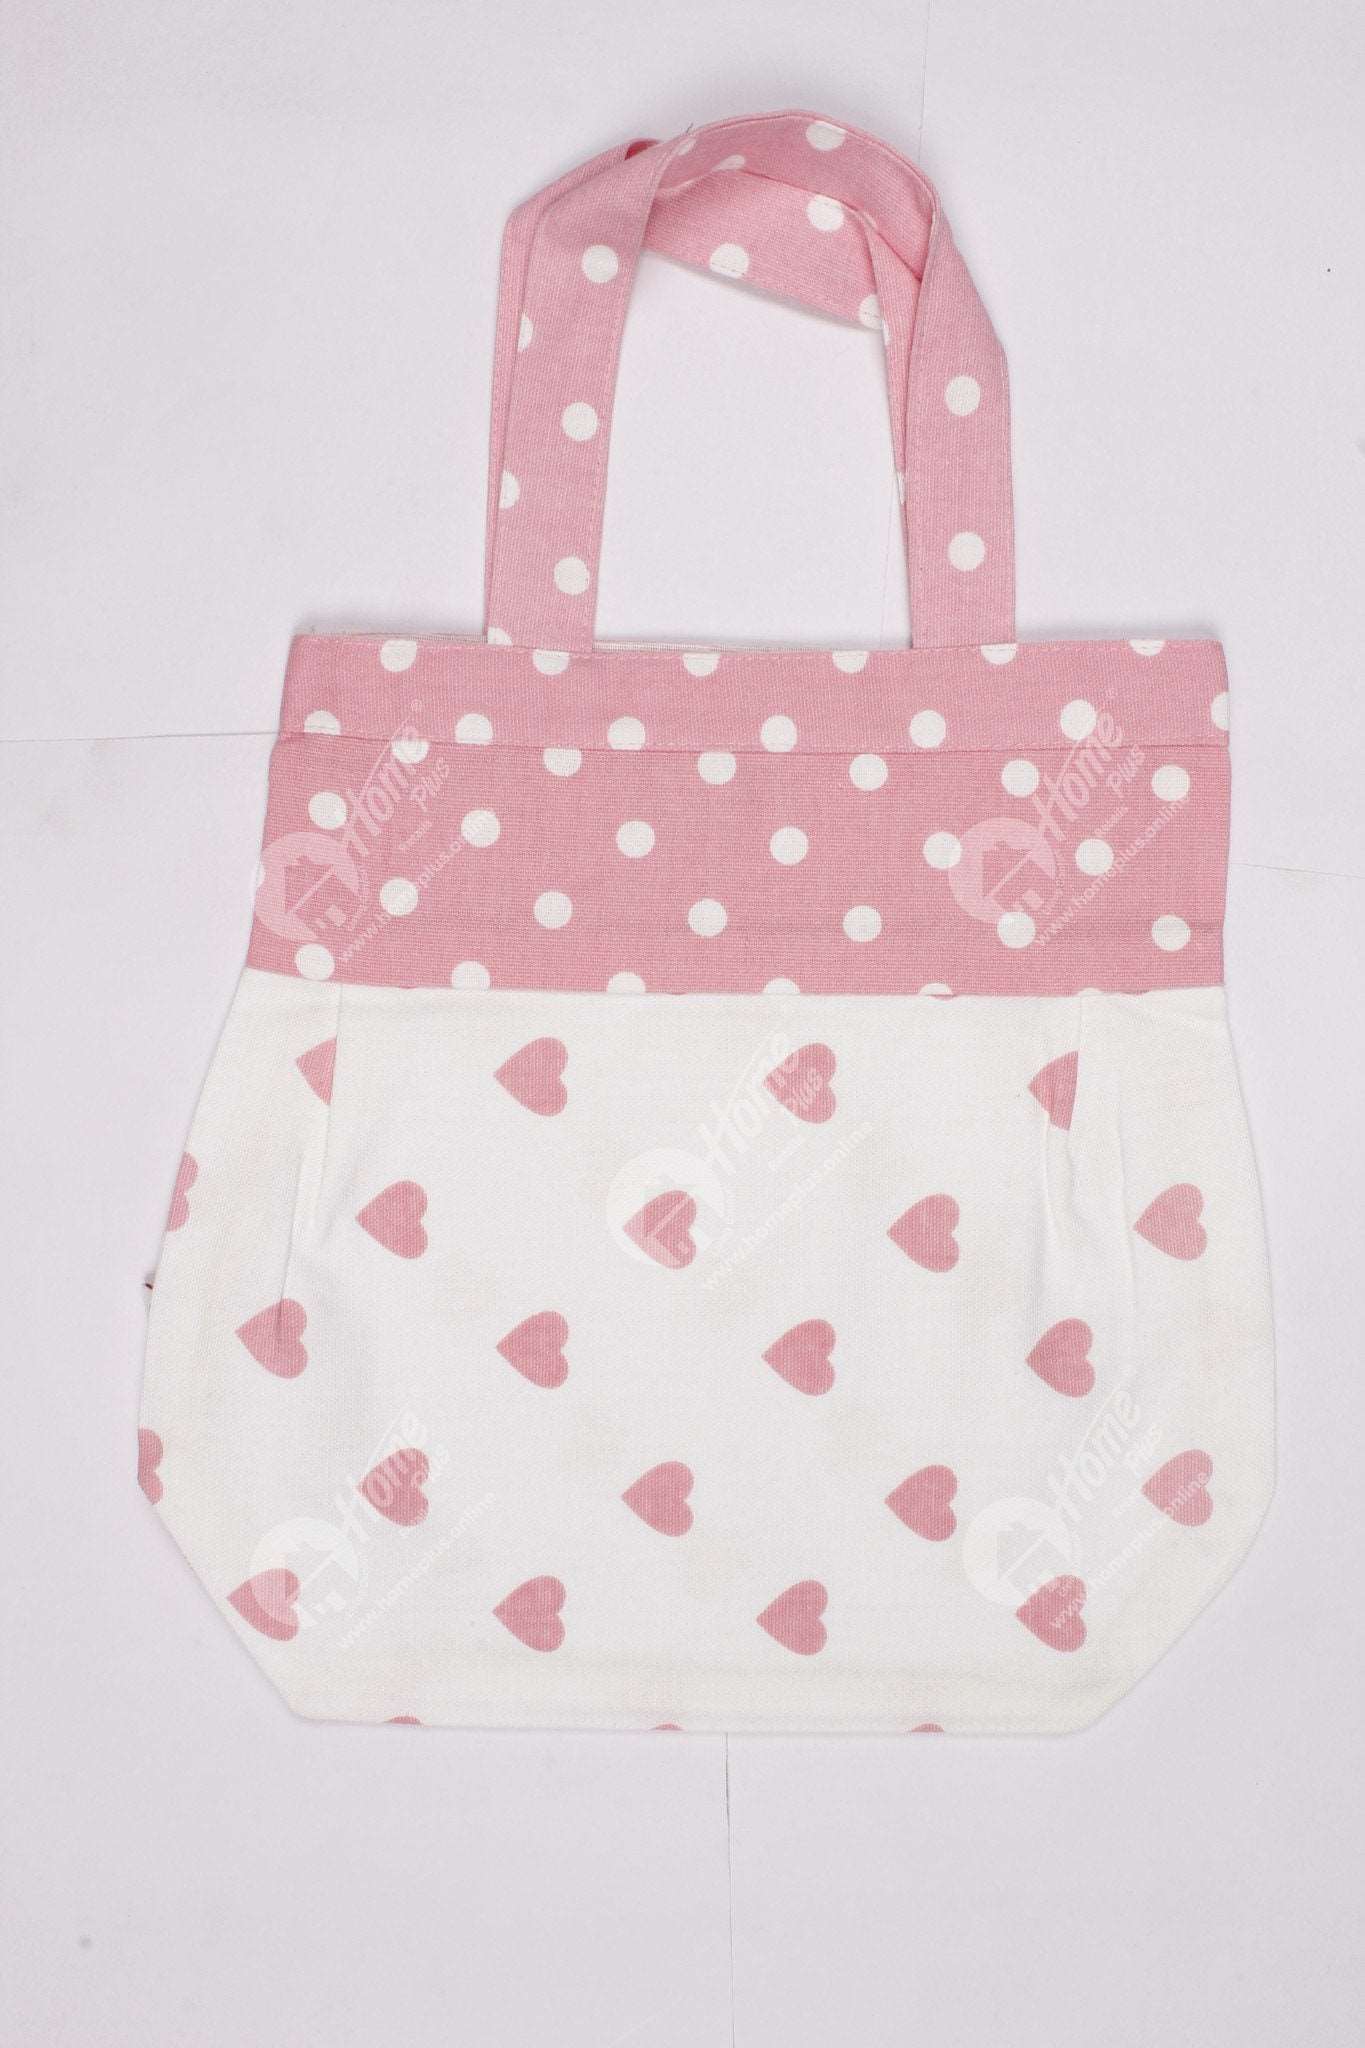 Fancy bag - Large Hearts Pink